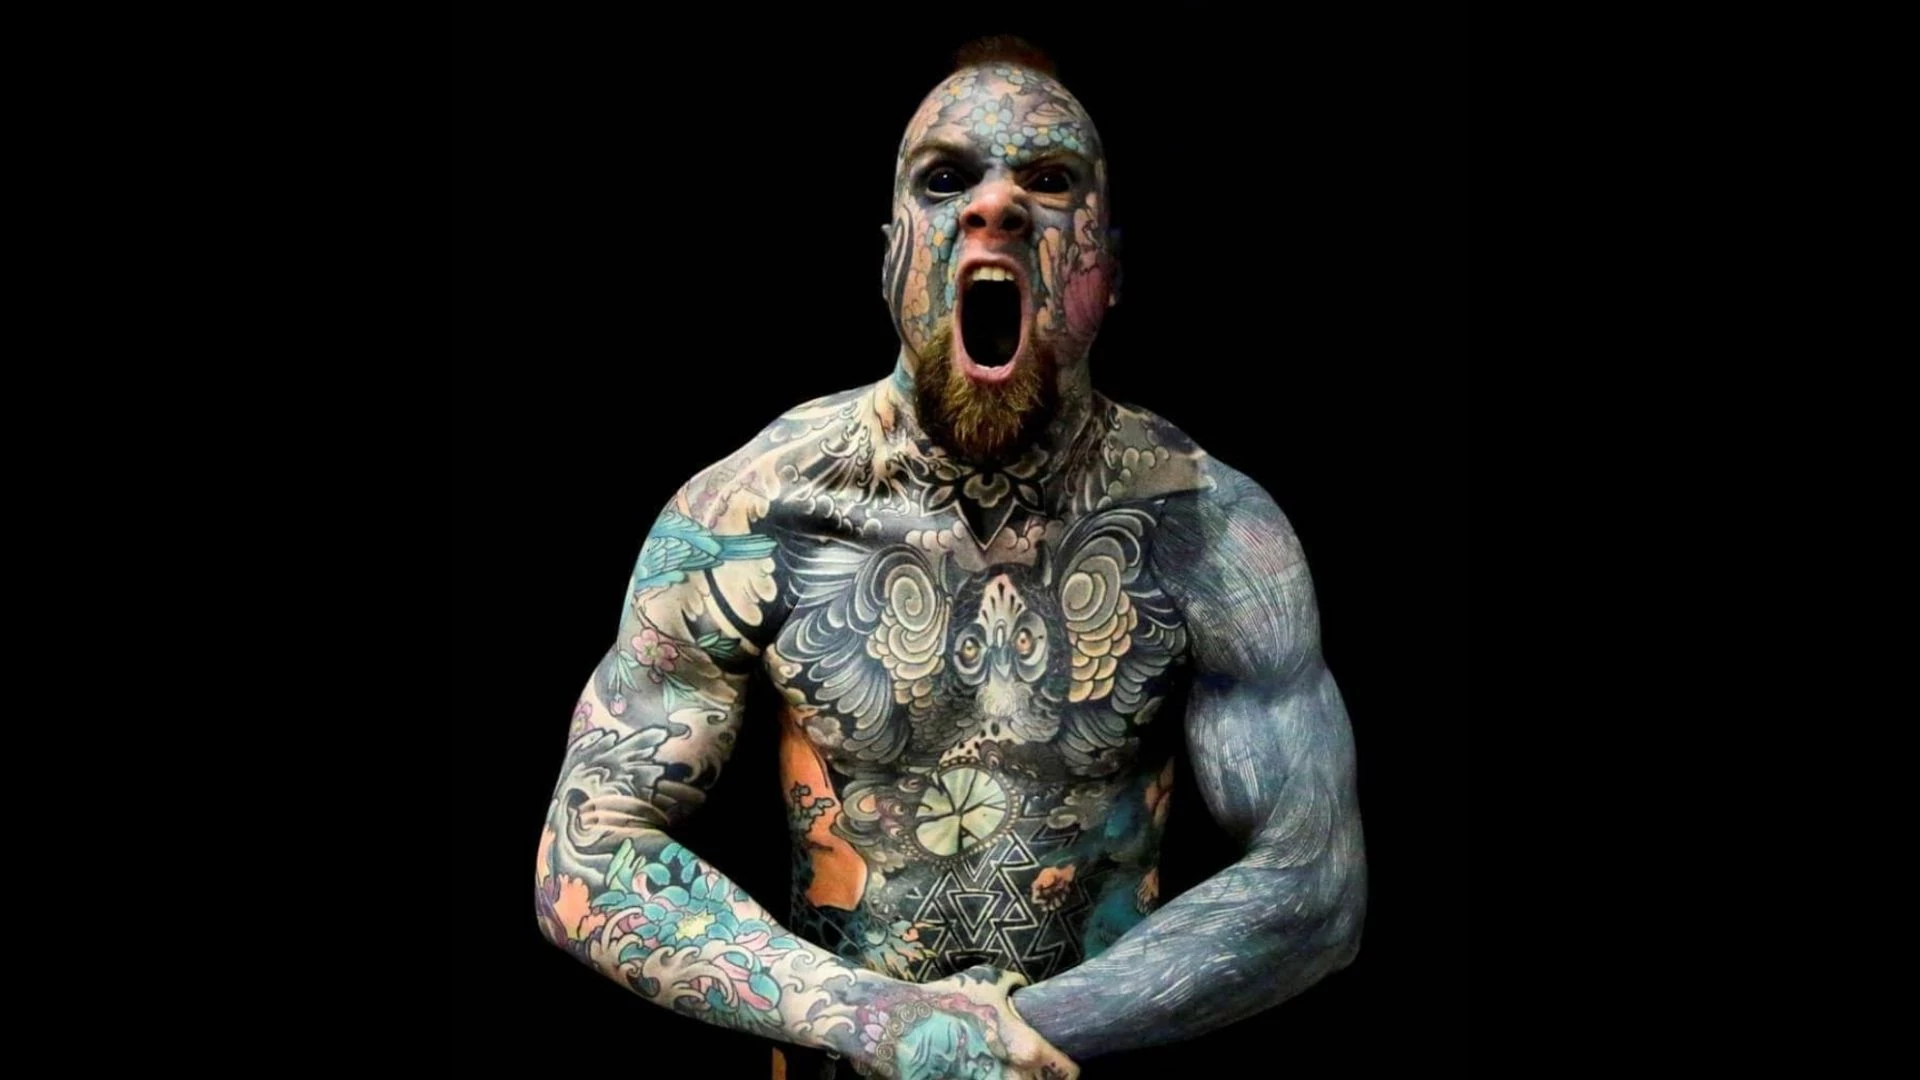 the Blackening Tattoo ahausberger1619  Profile  Pinterest